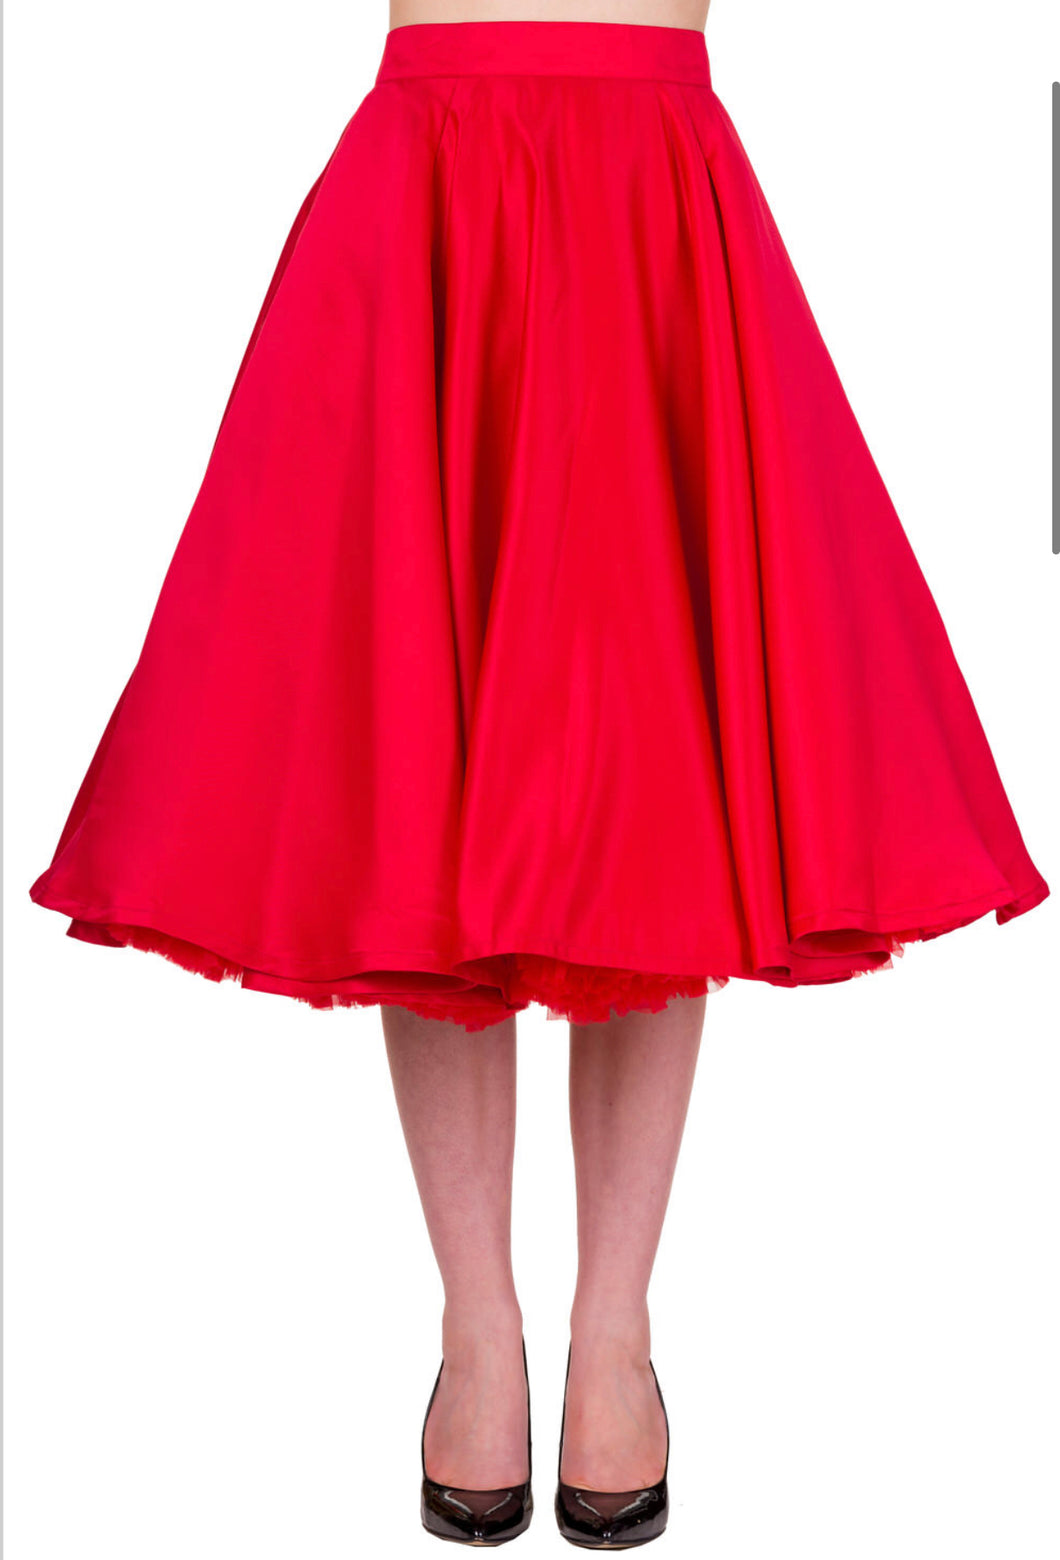 Vidunderlig rød  nederdel